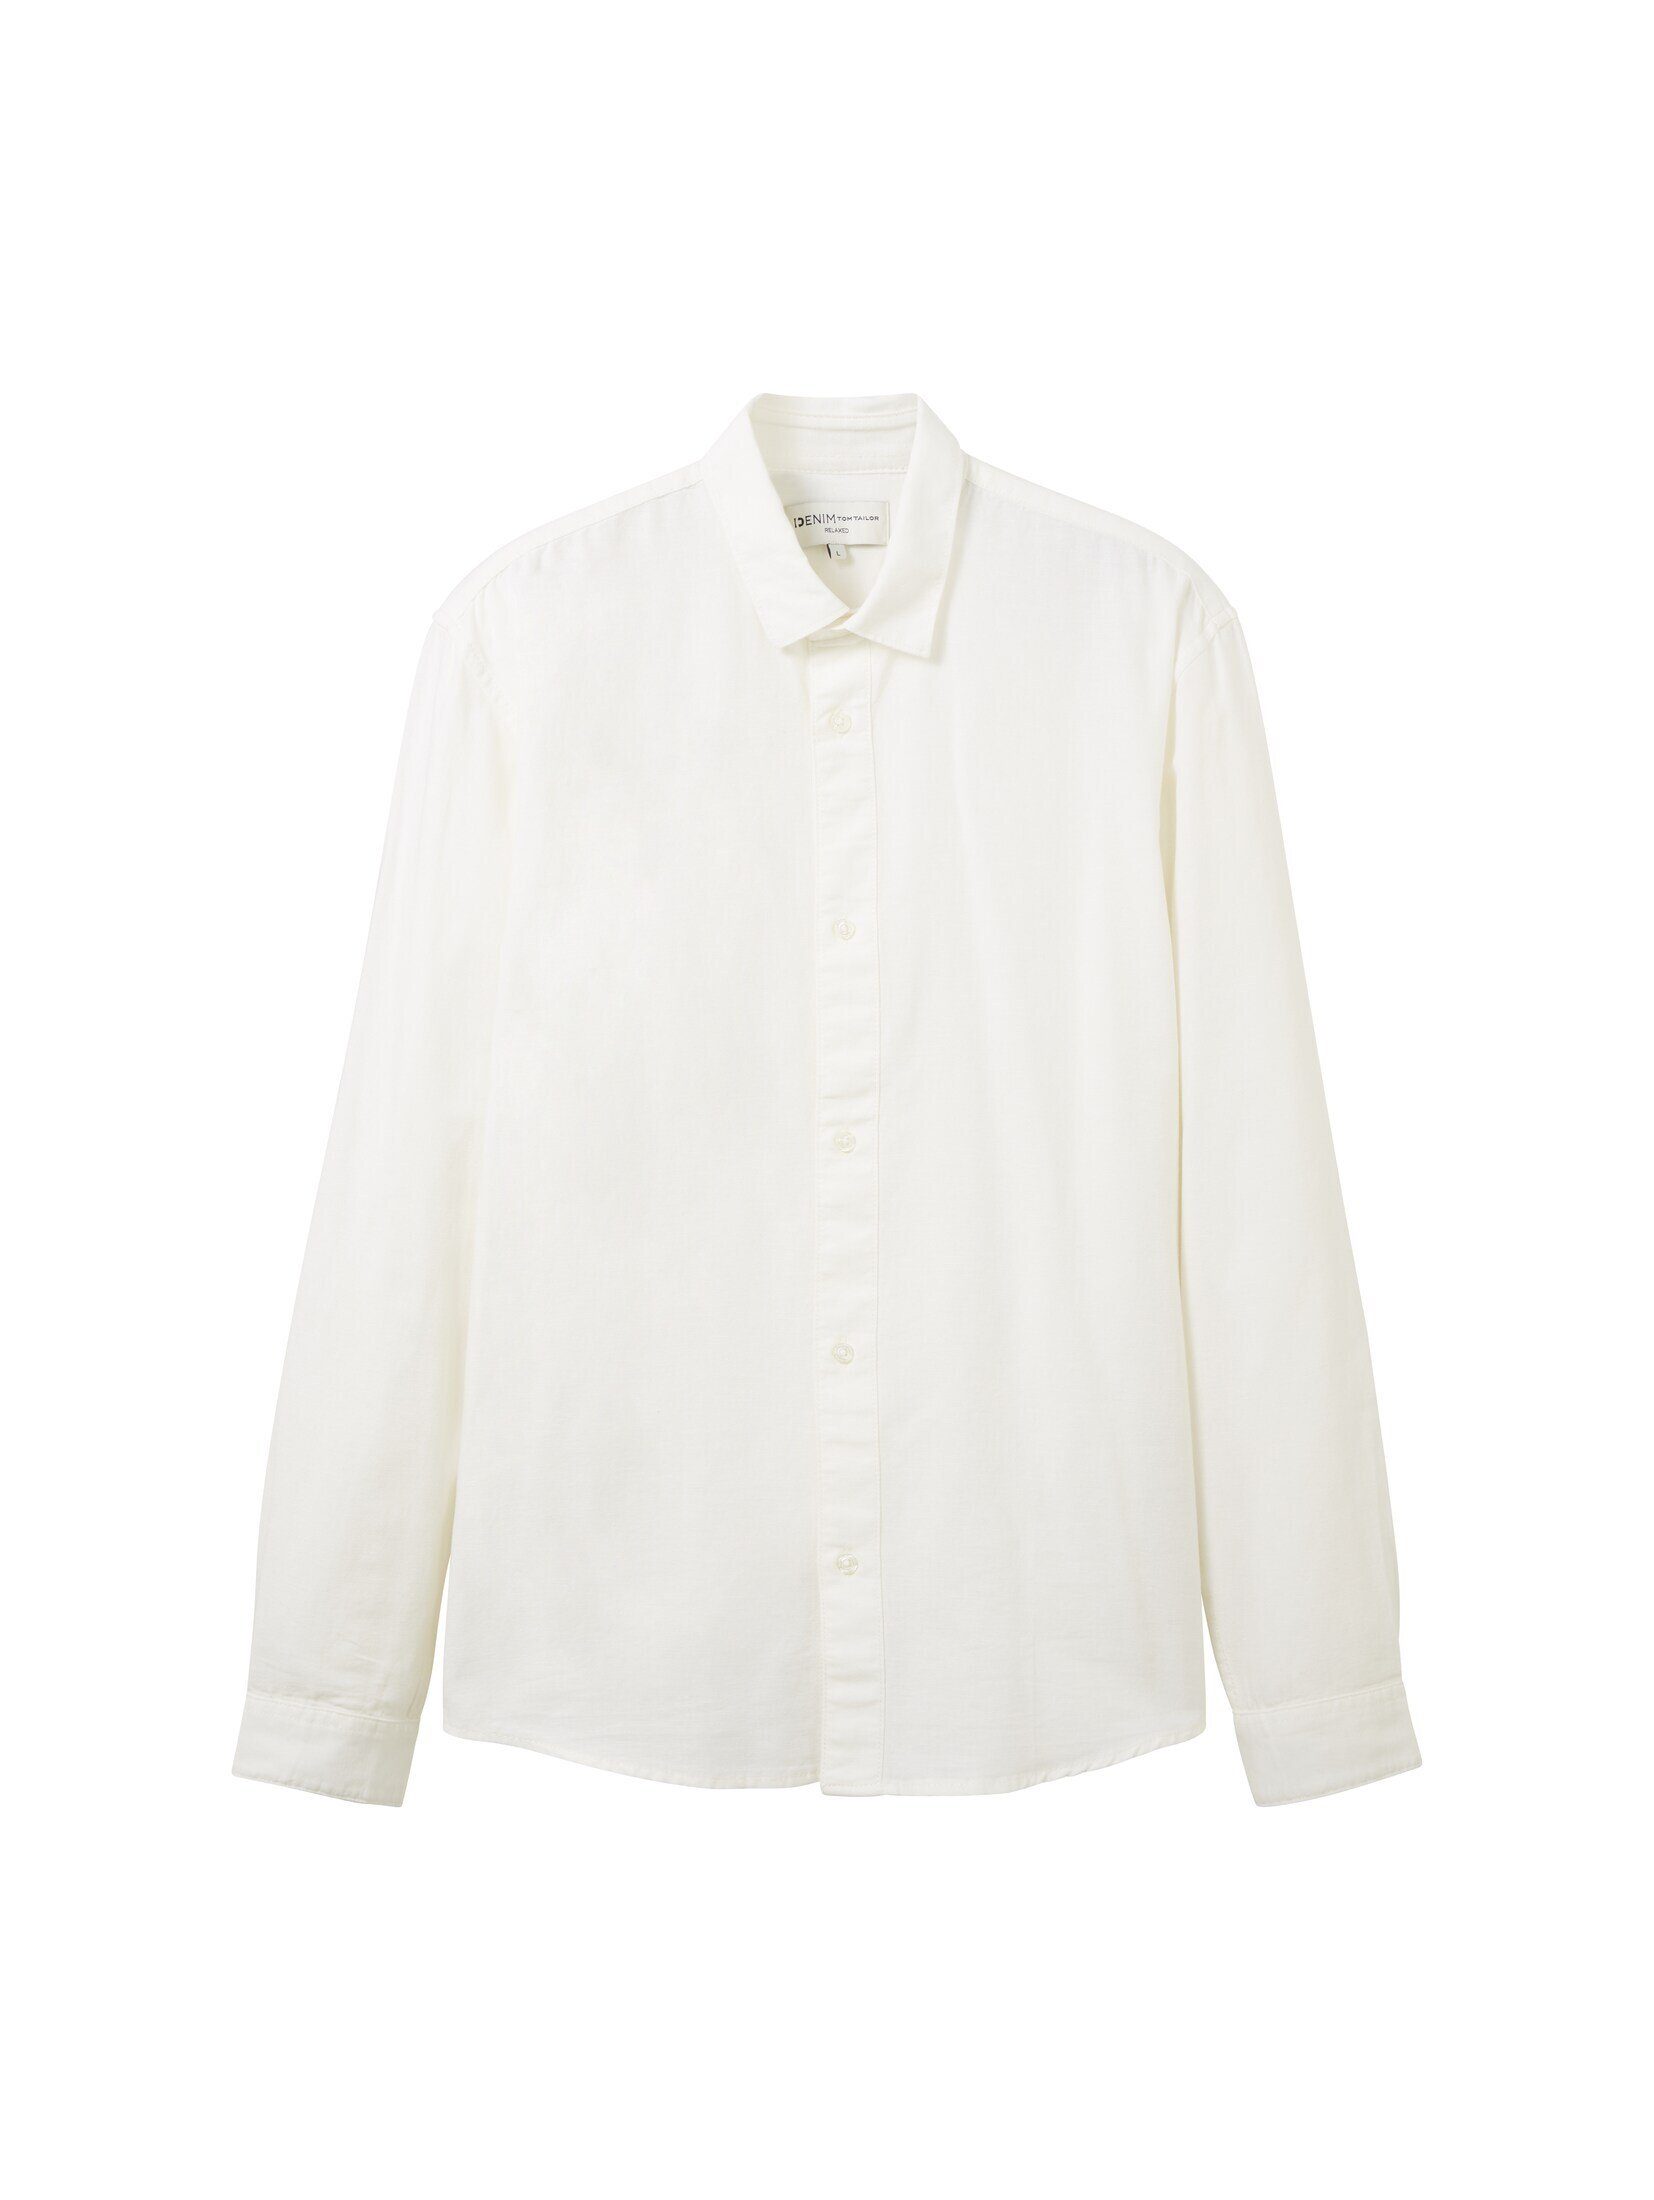 TOM TAILOR Denim Hemd Oxford Wool Langarmhemd White